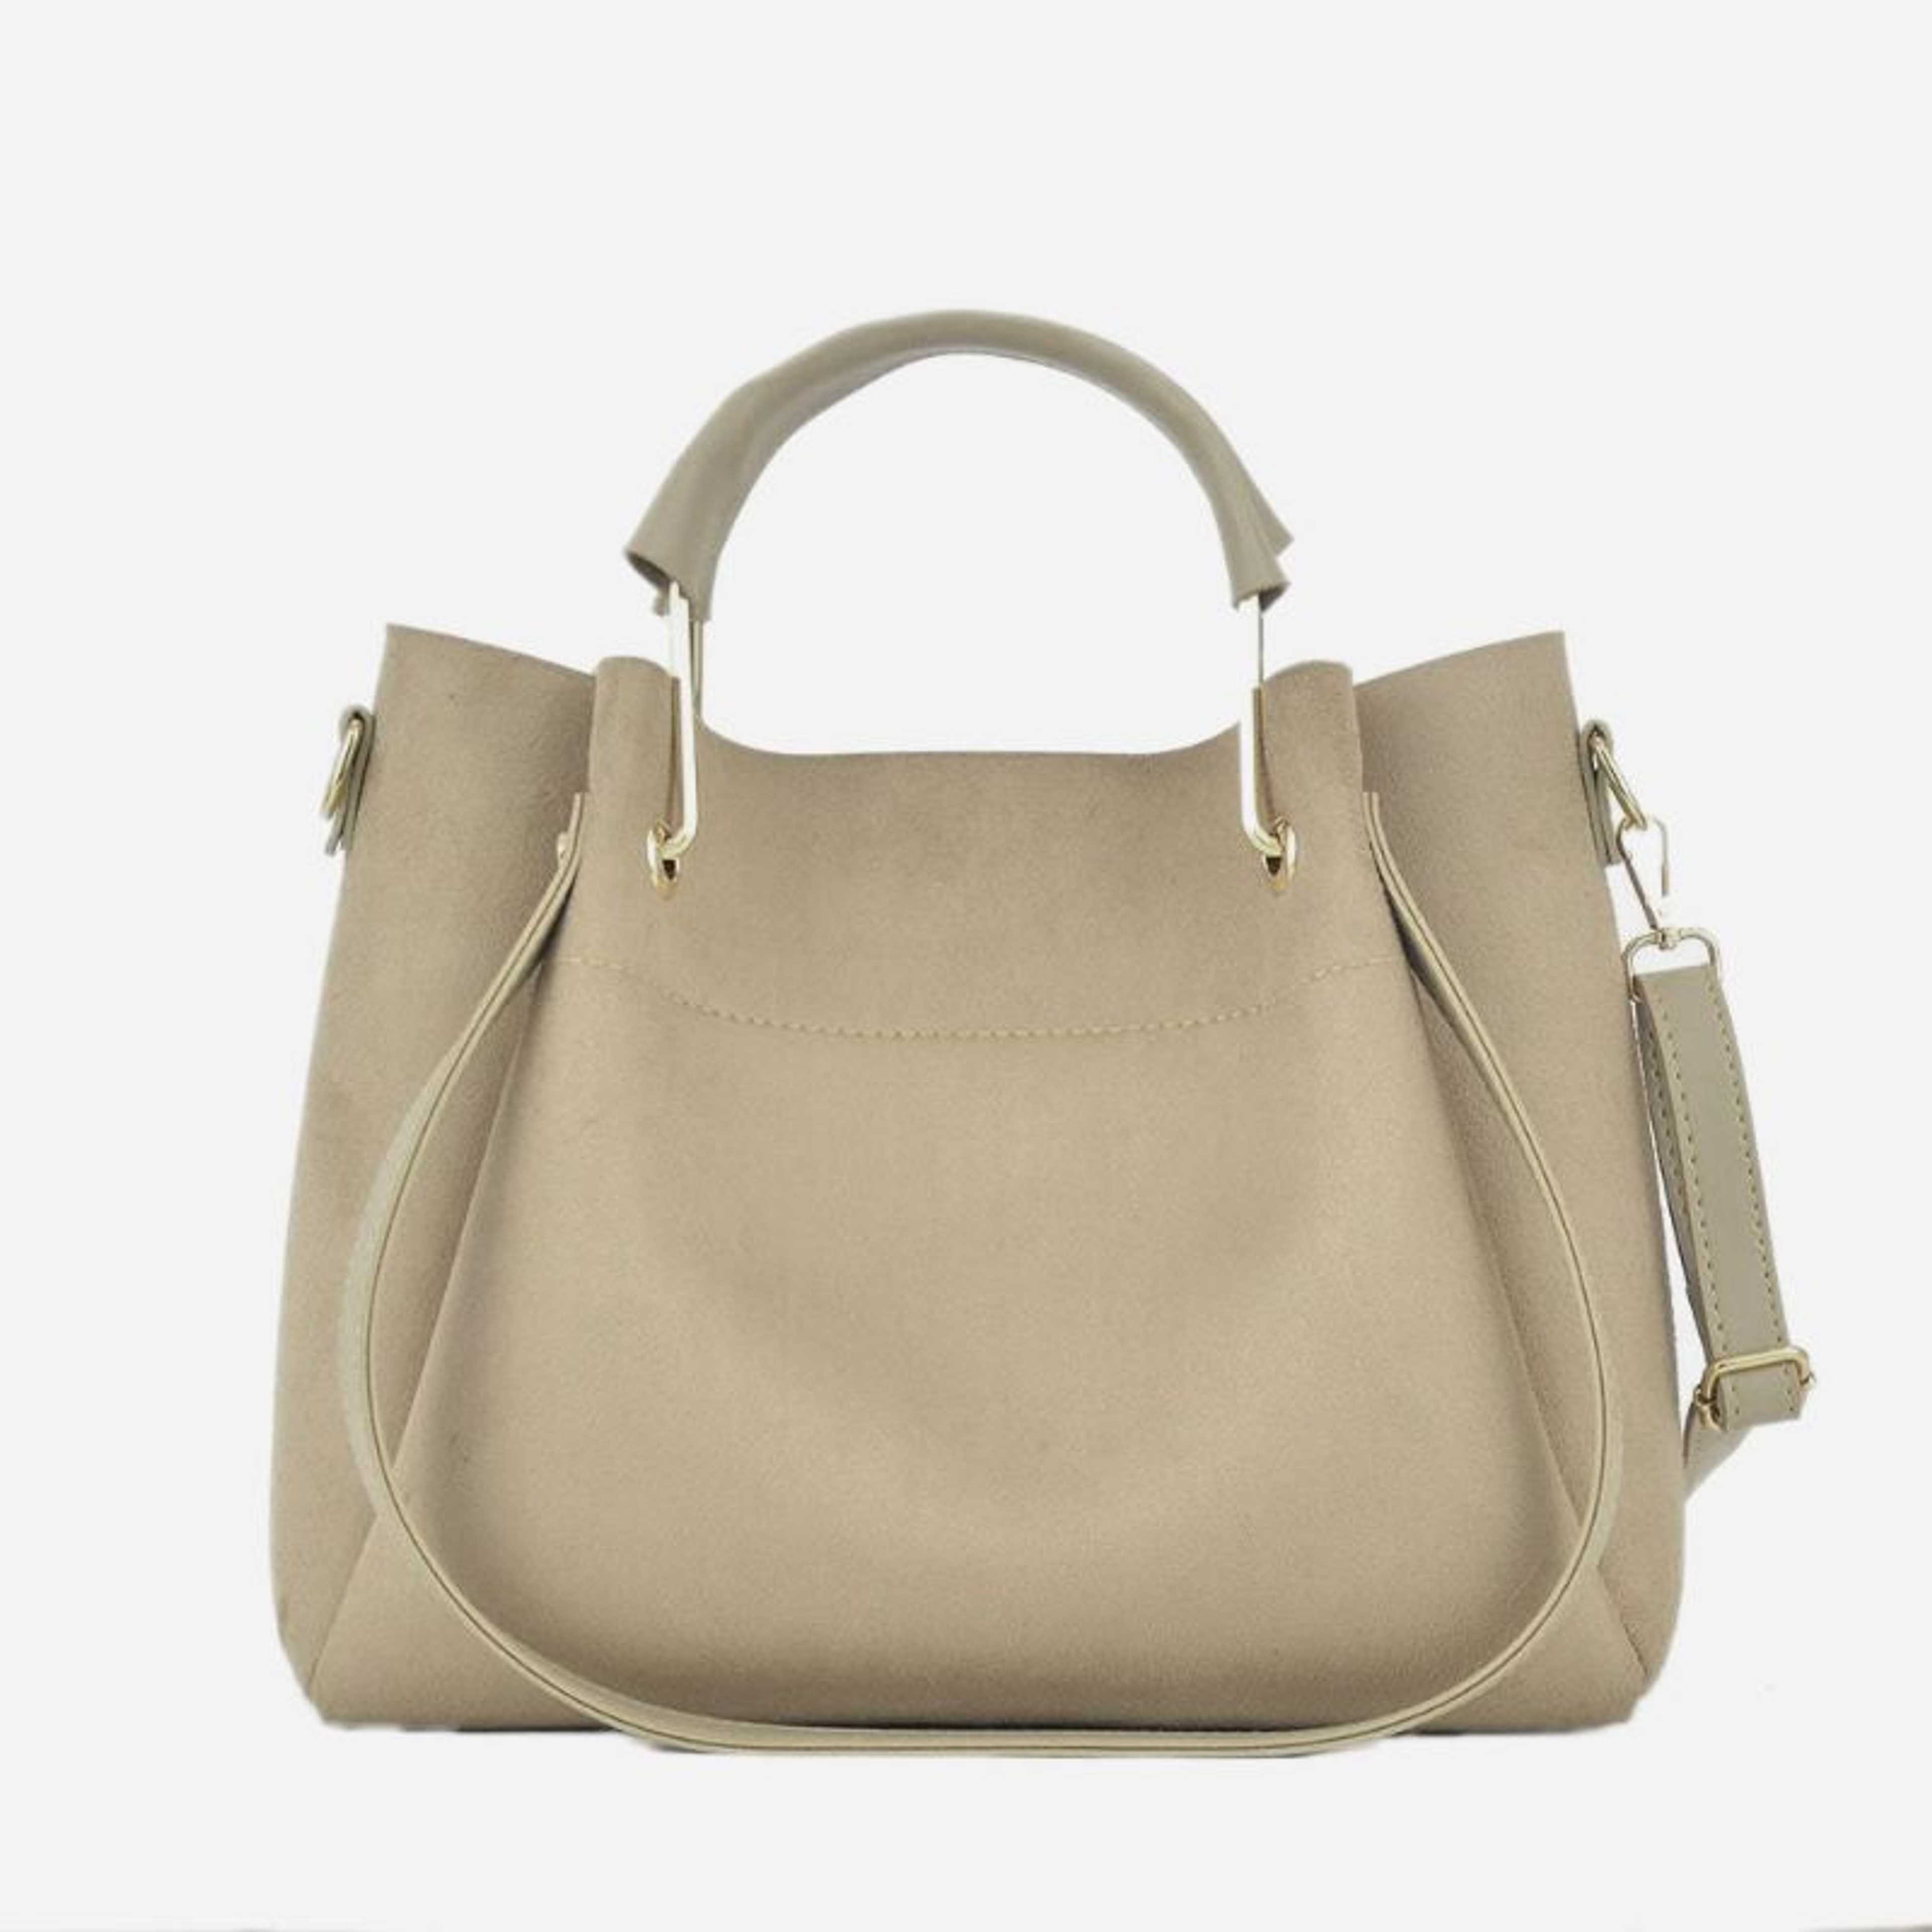 Handbags For Woman - Beige Emerald Handbag